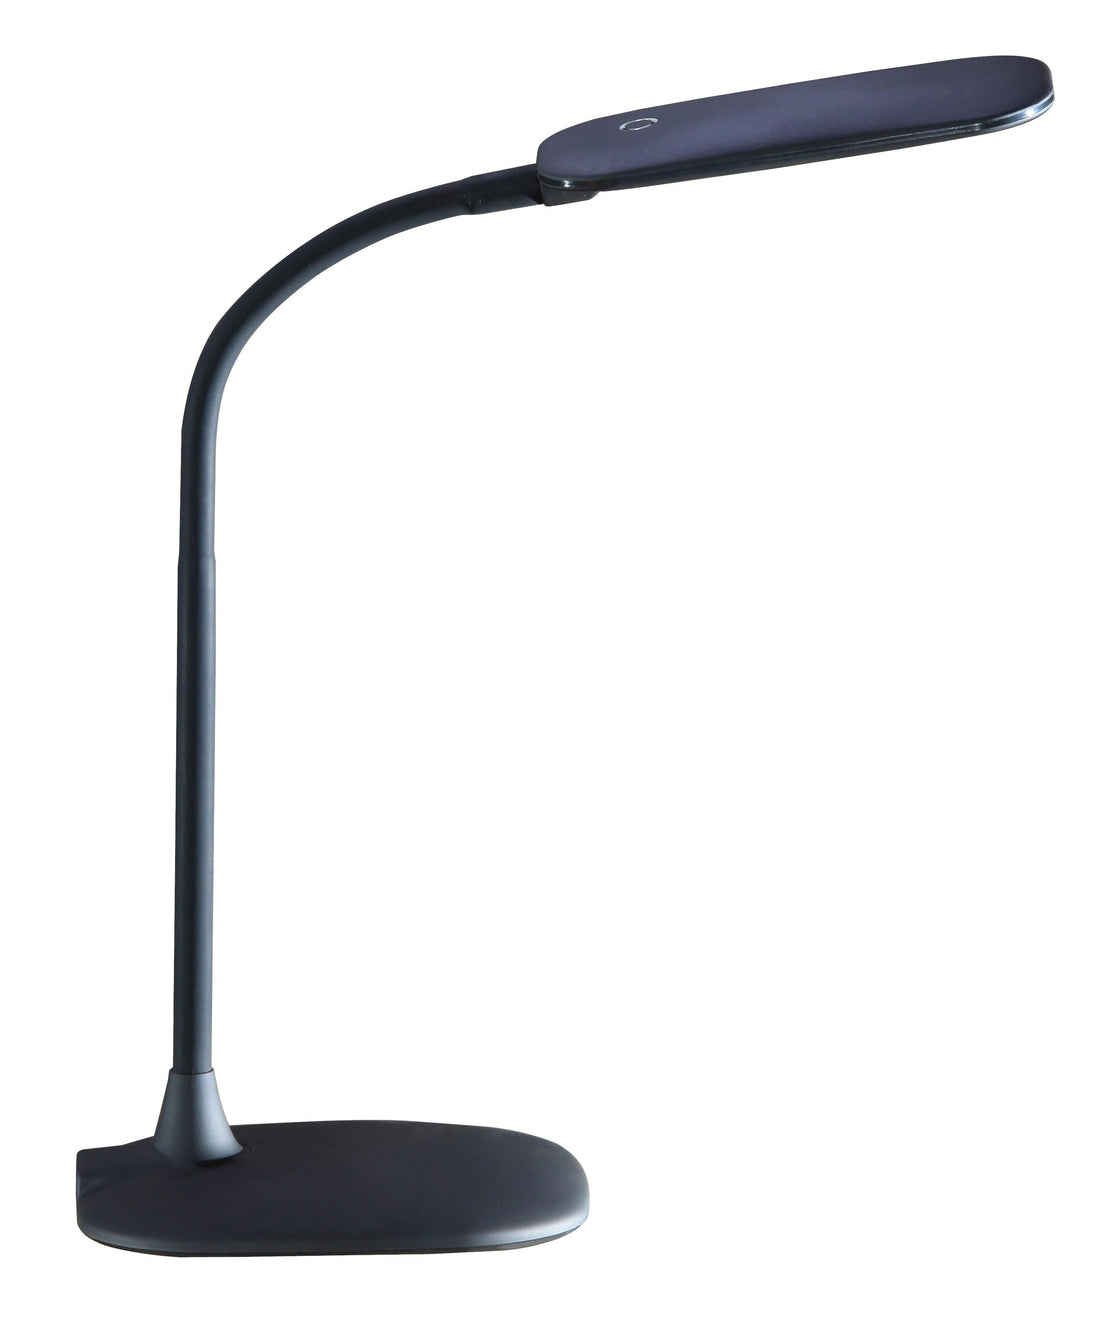 STUDIO LAMP MEI PLASTIC BLACK H55 LED 6,5W WARM LIGHT TOUCH